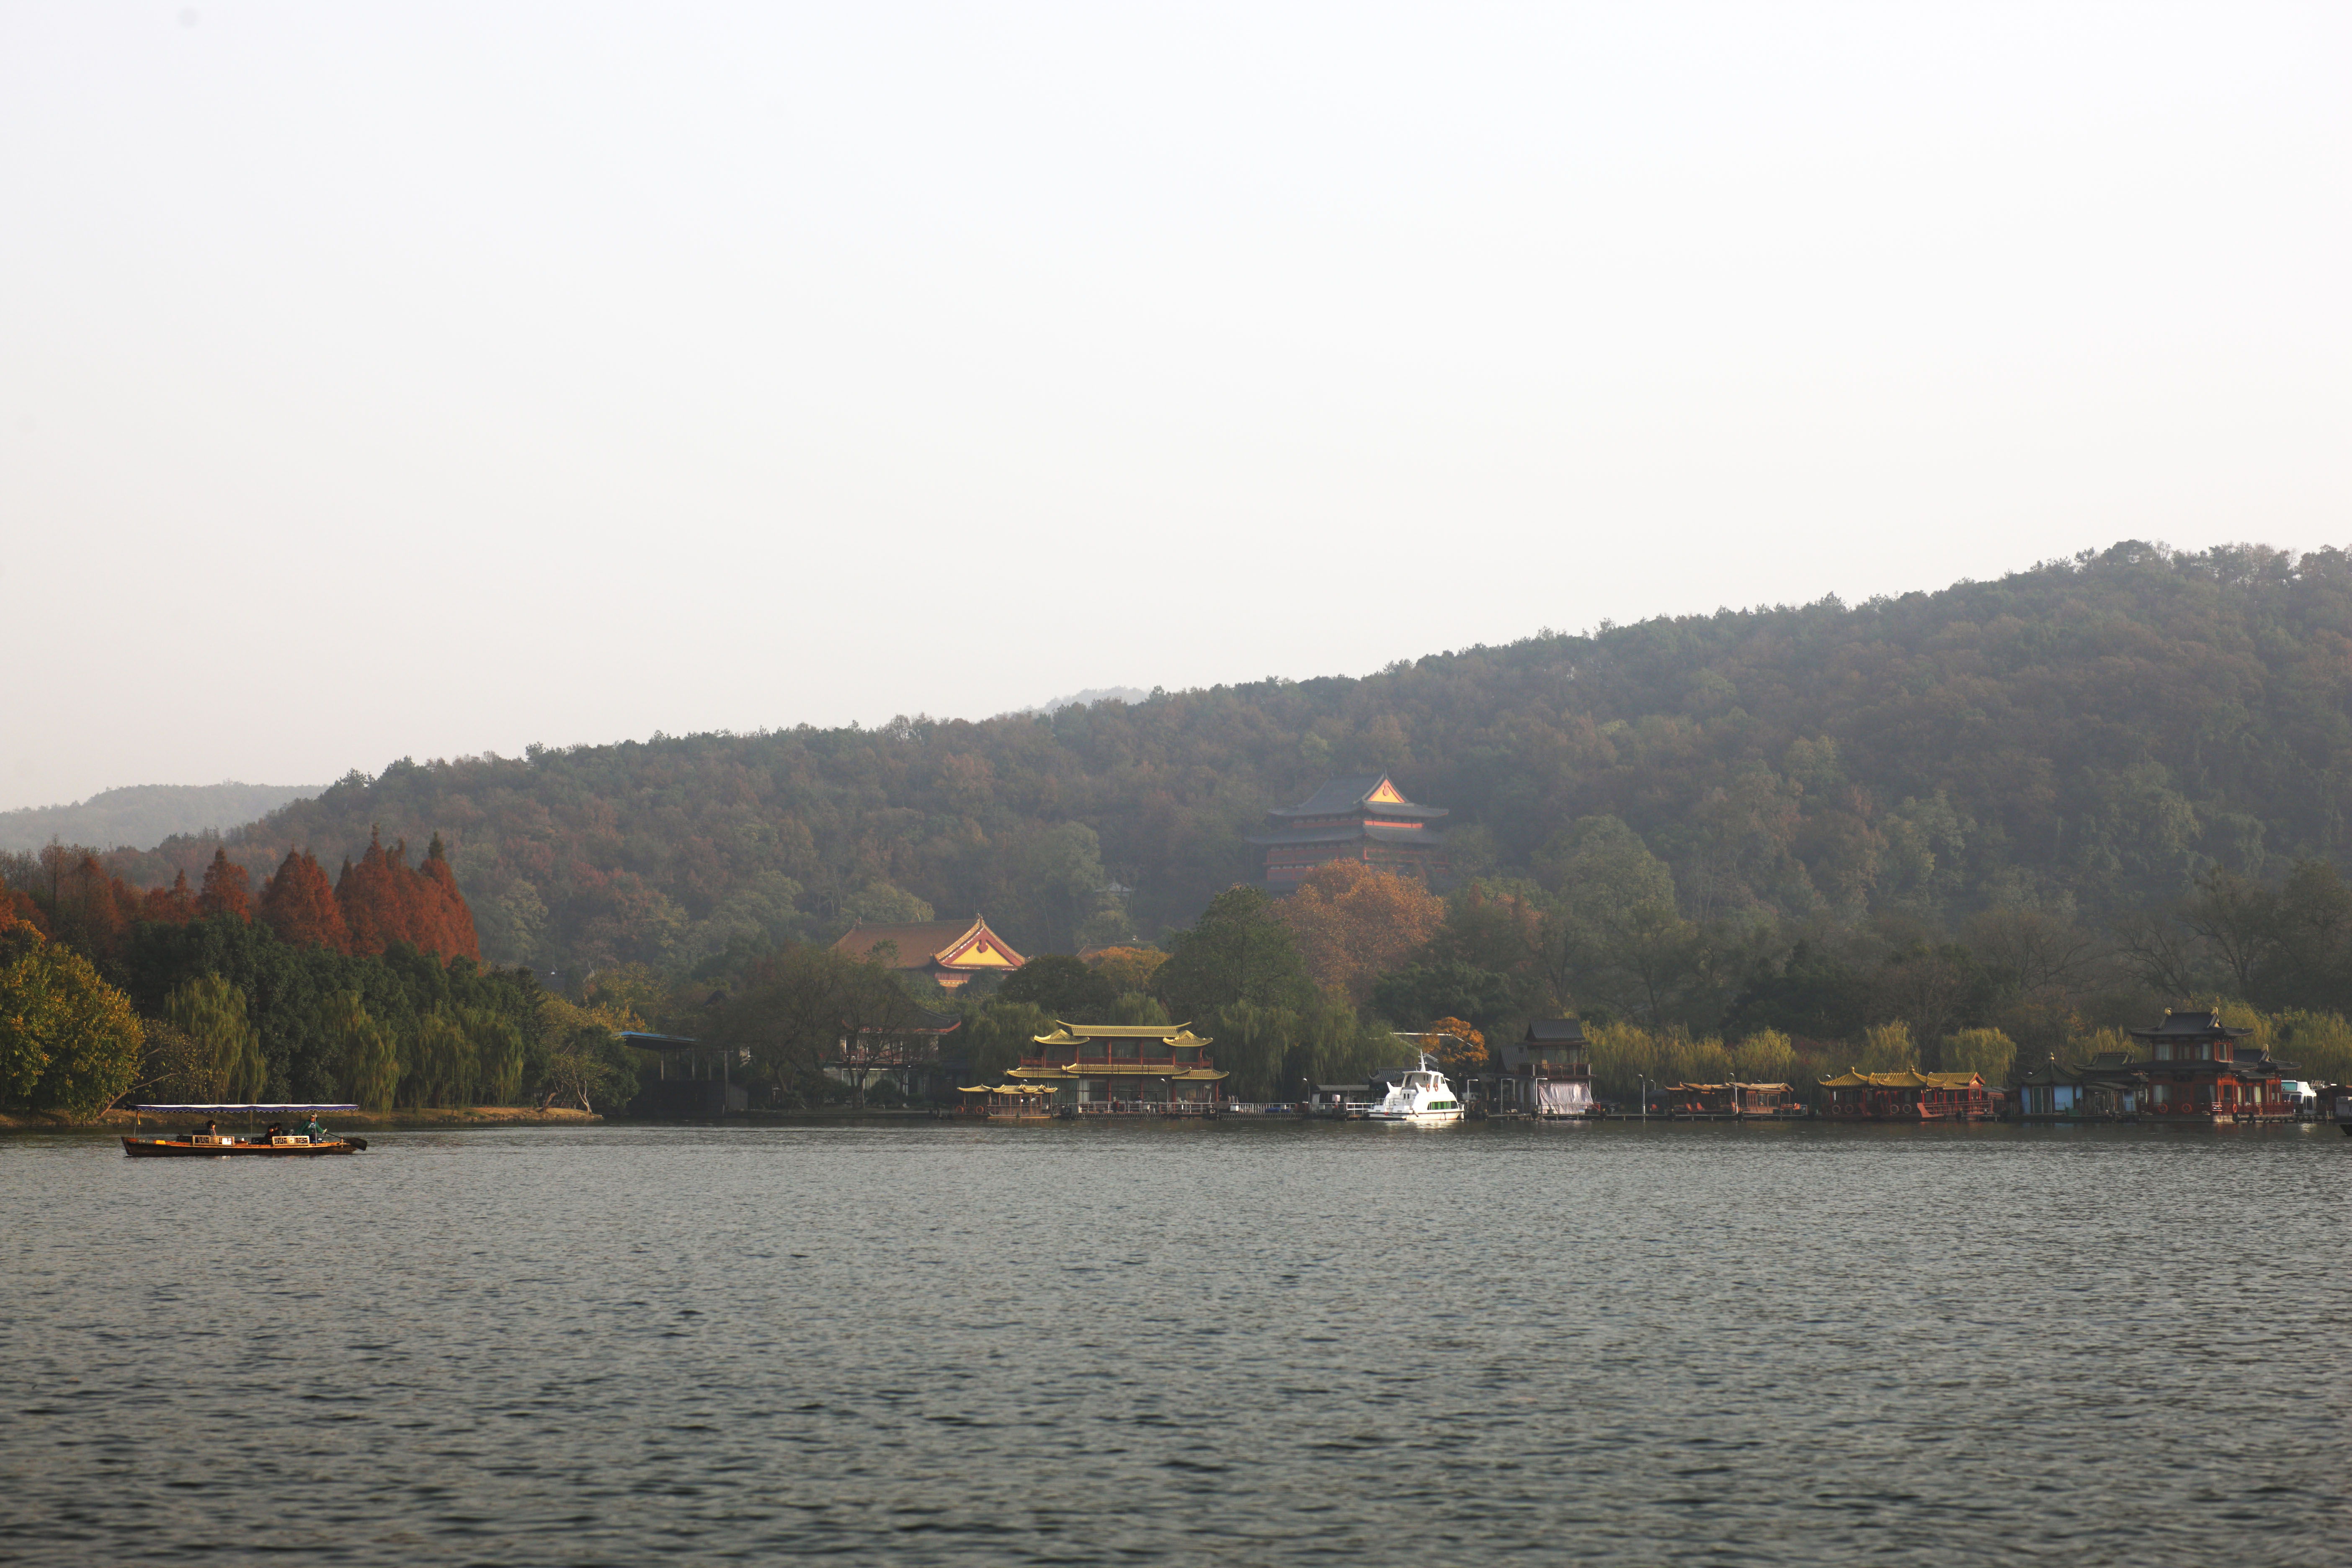 fotografia, materiale, libero il panorama, dipinga, fotografia di scorta,Xi-hu il lago, nave, Saiko, , Foglie colorate